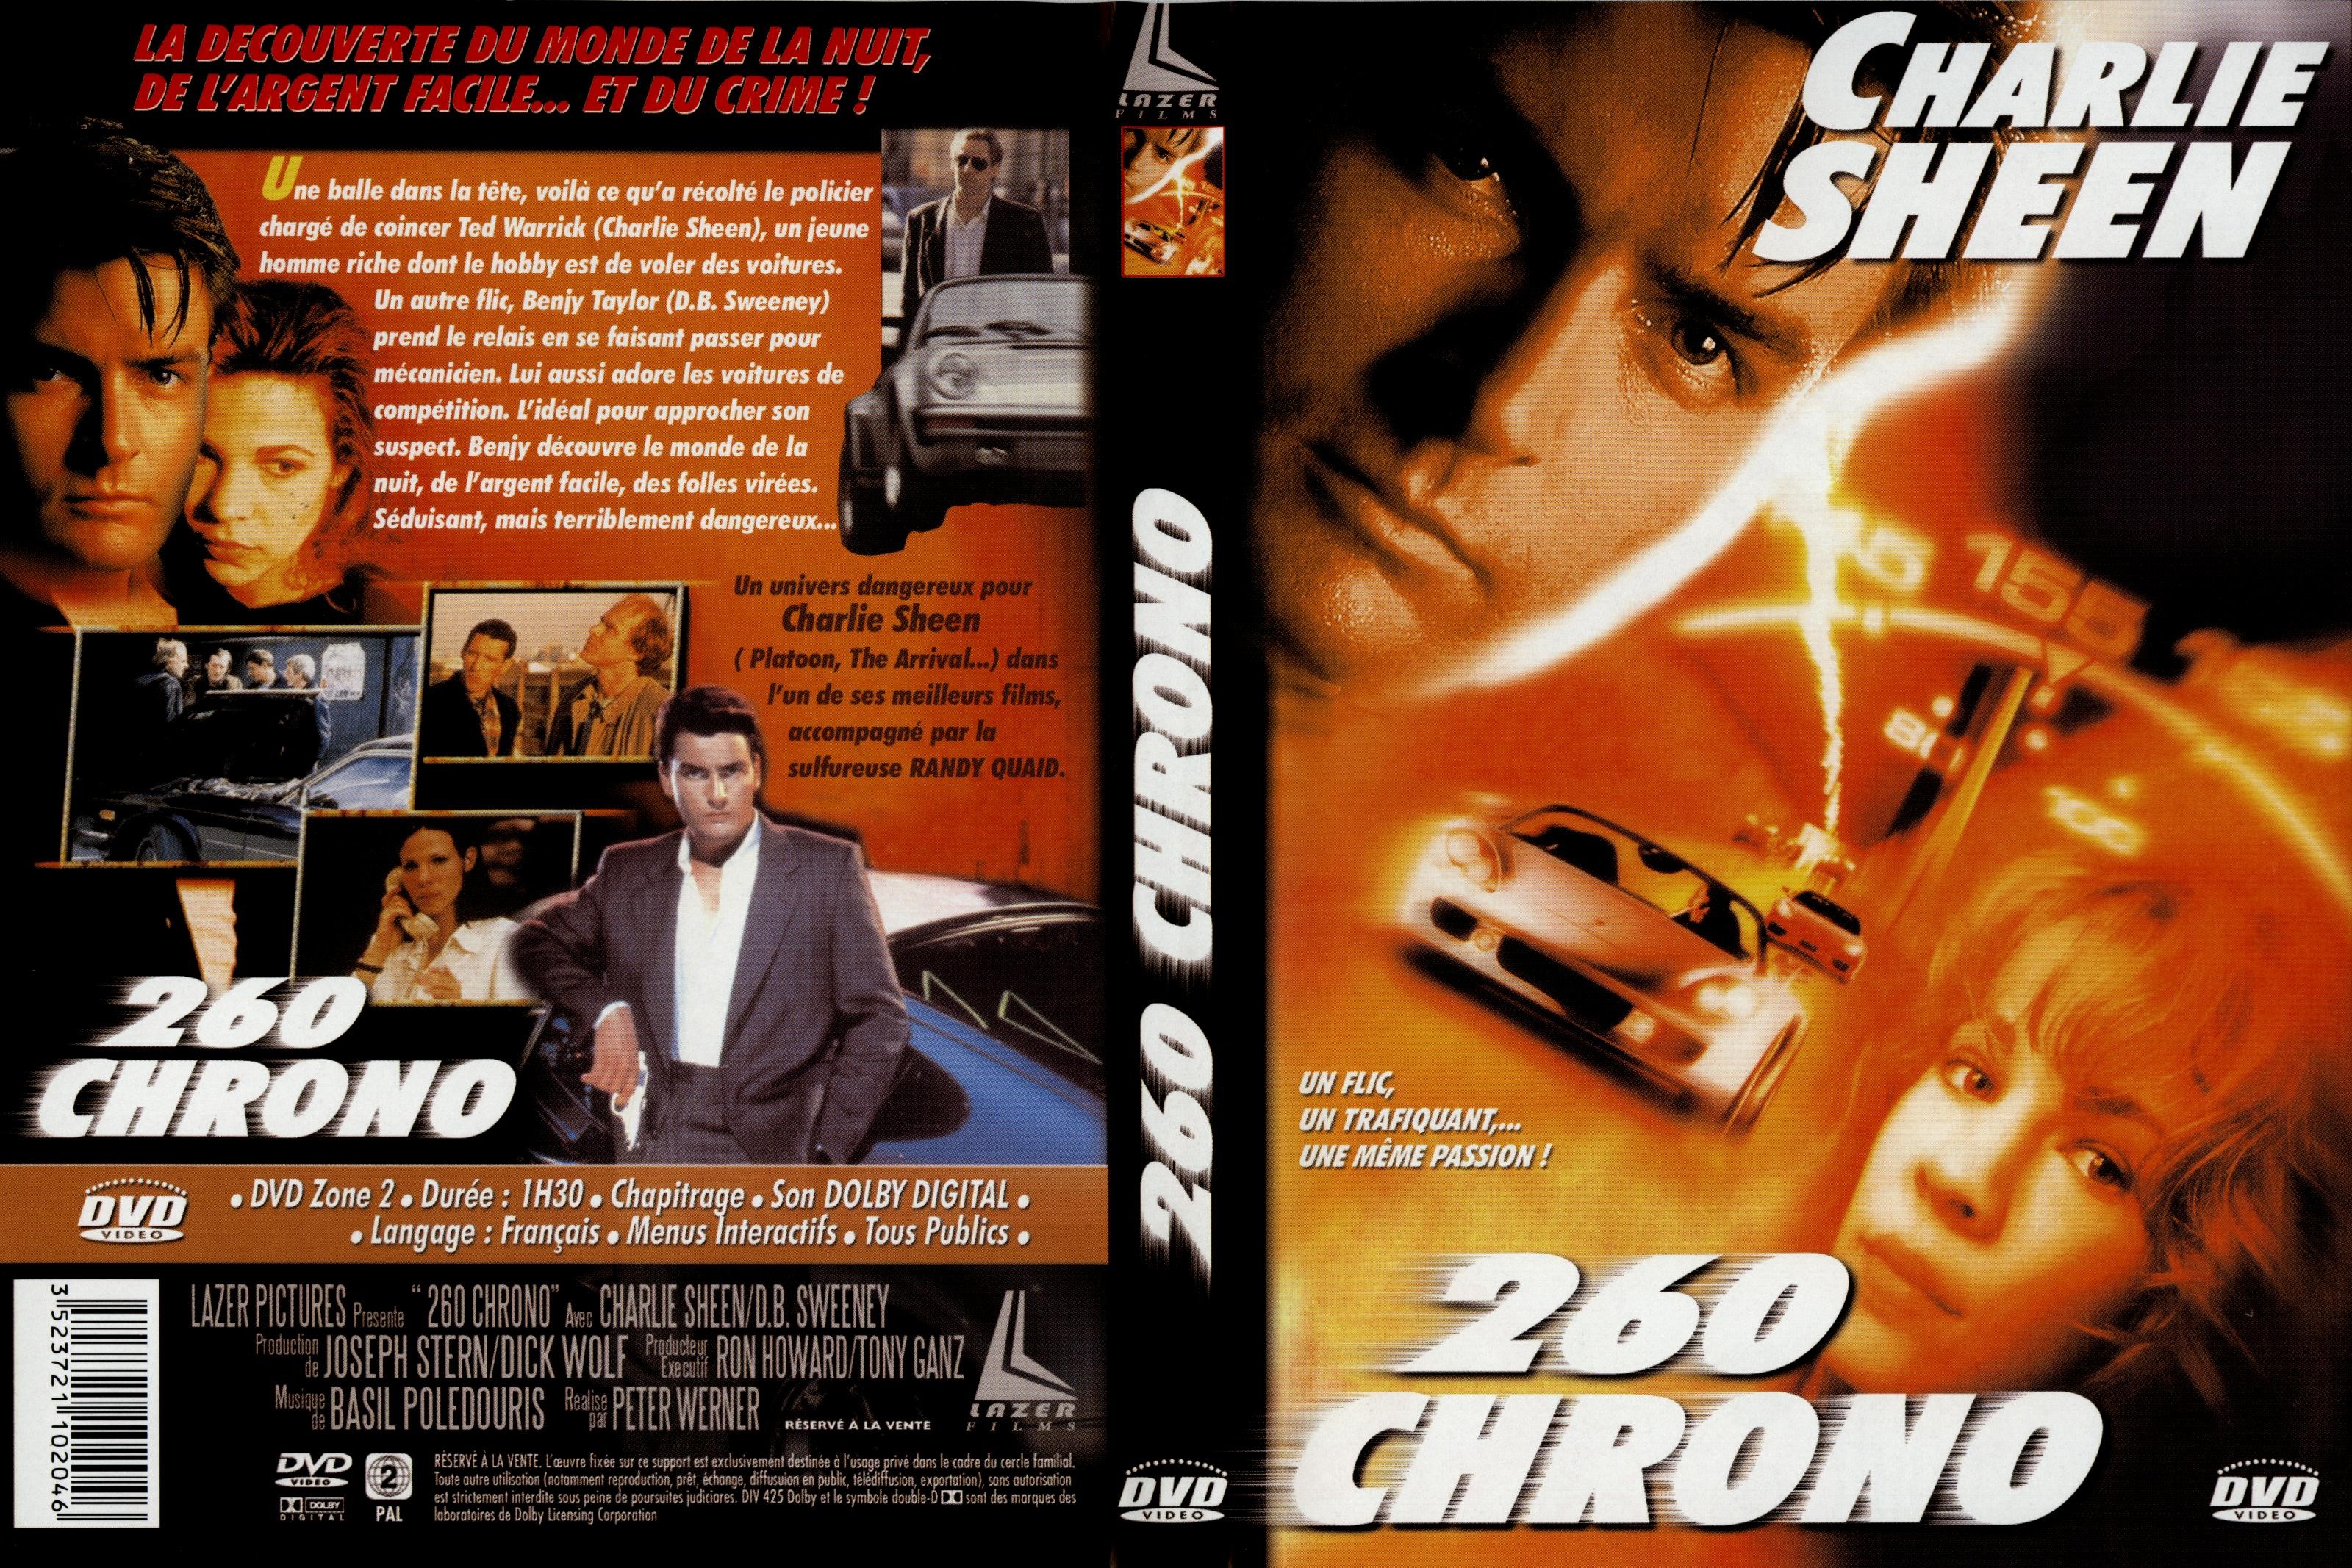 Jaquette DVD 260 Chrono